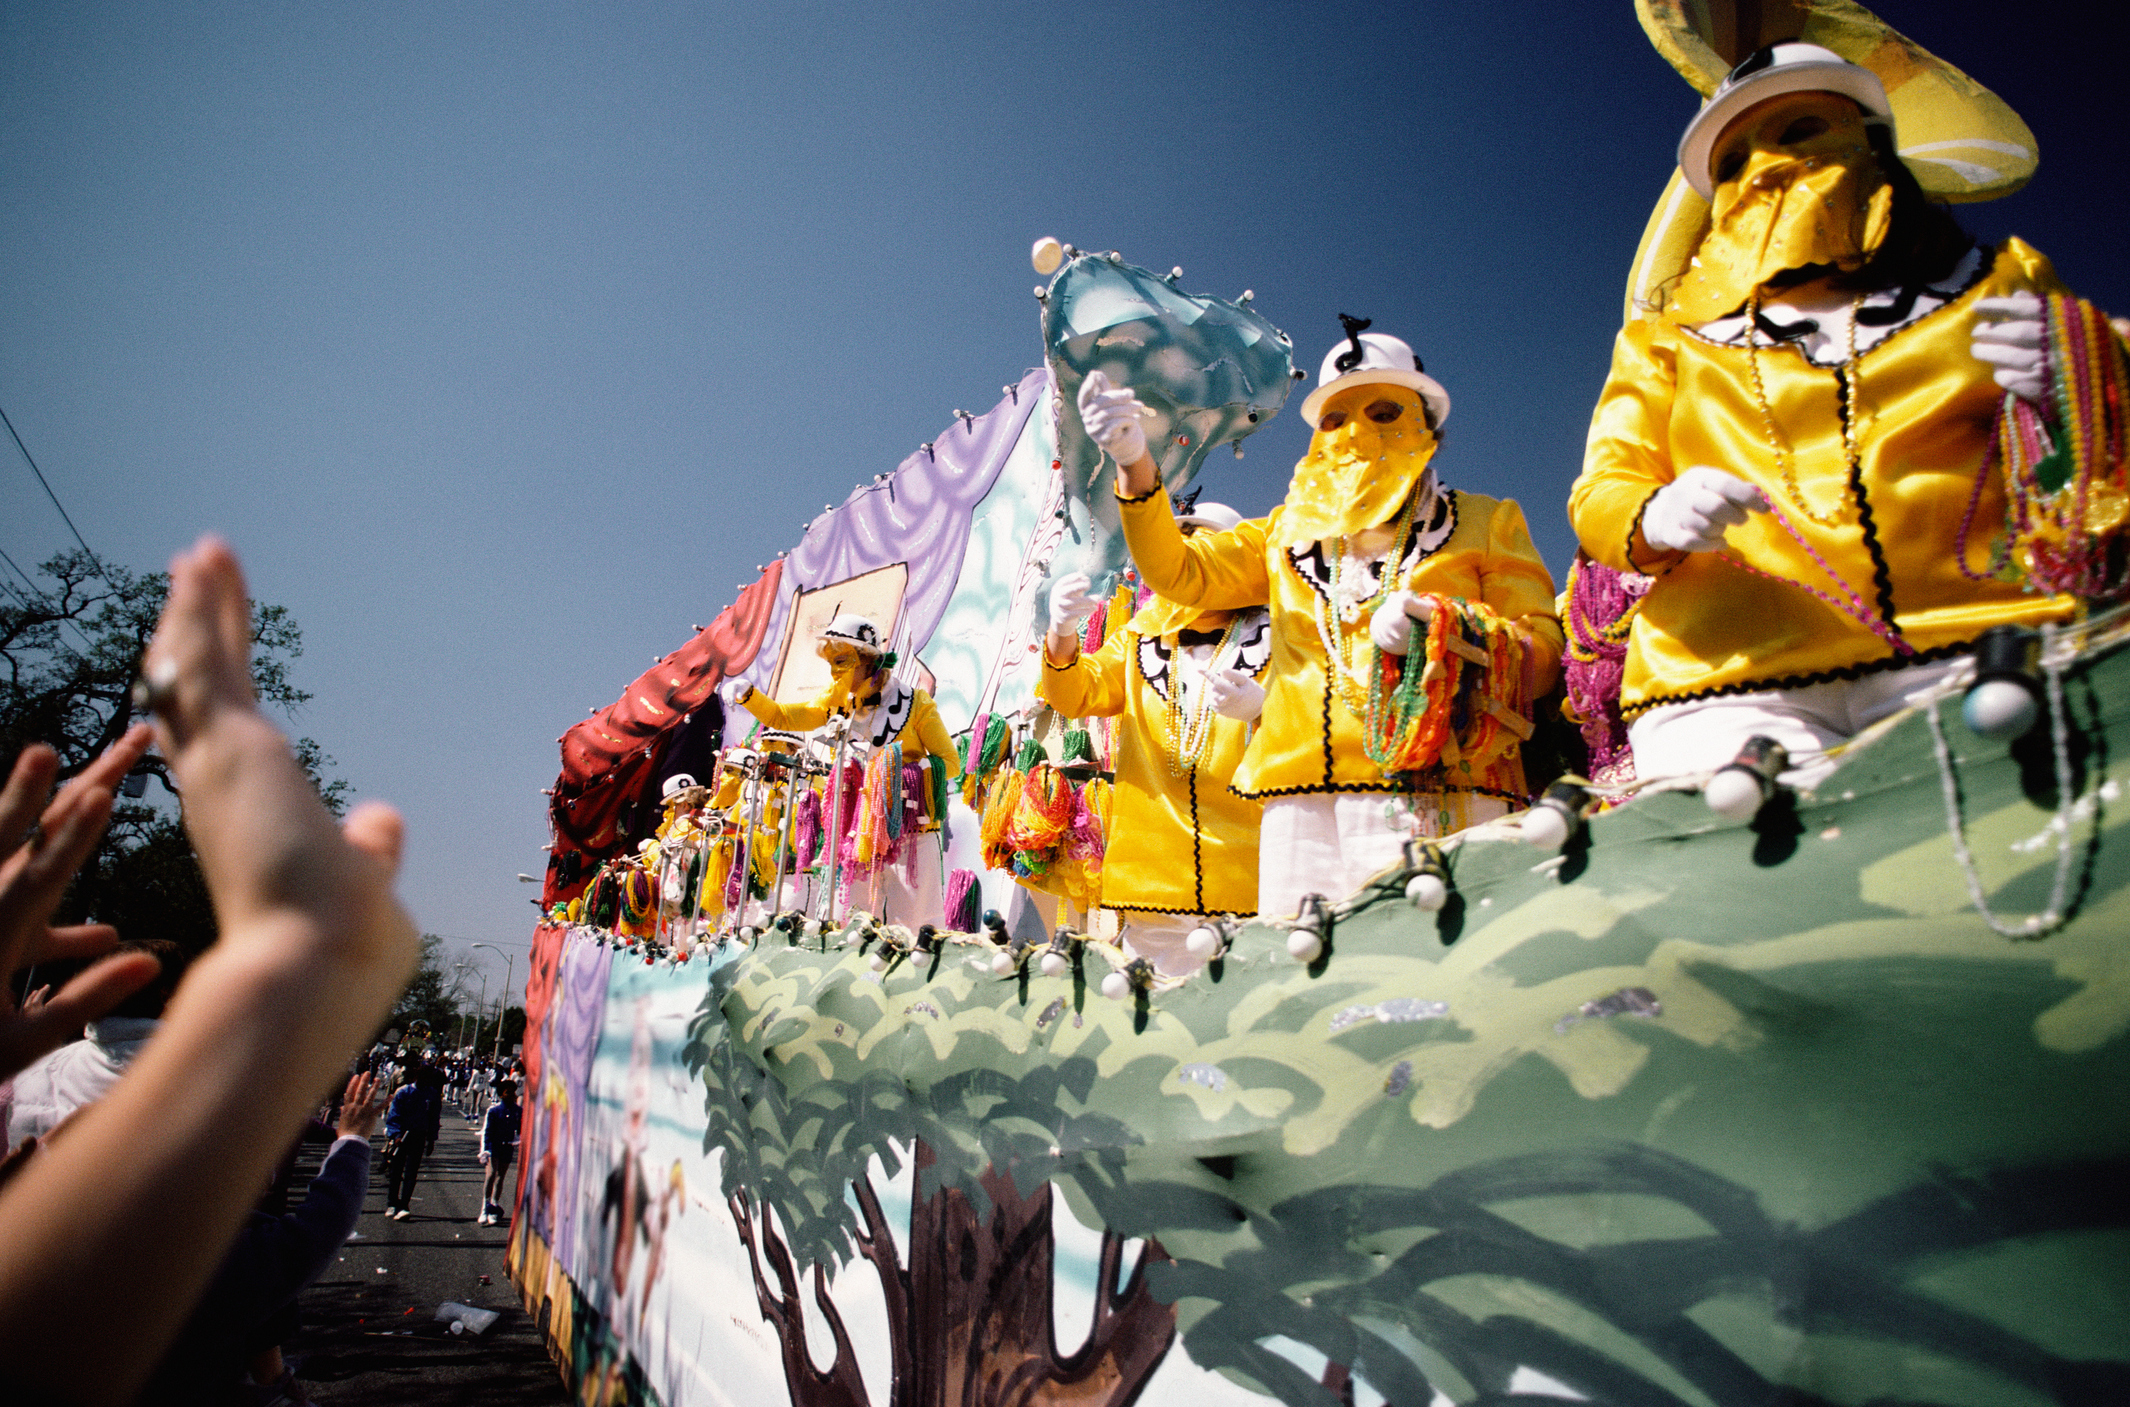 Mardi Gras revelers riding on a float.